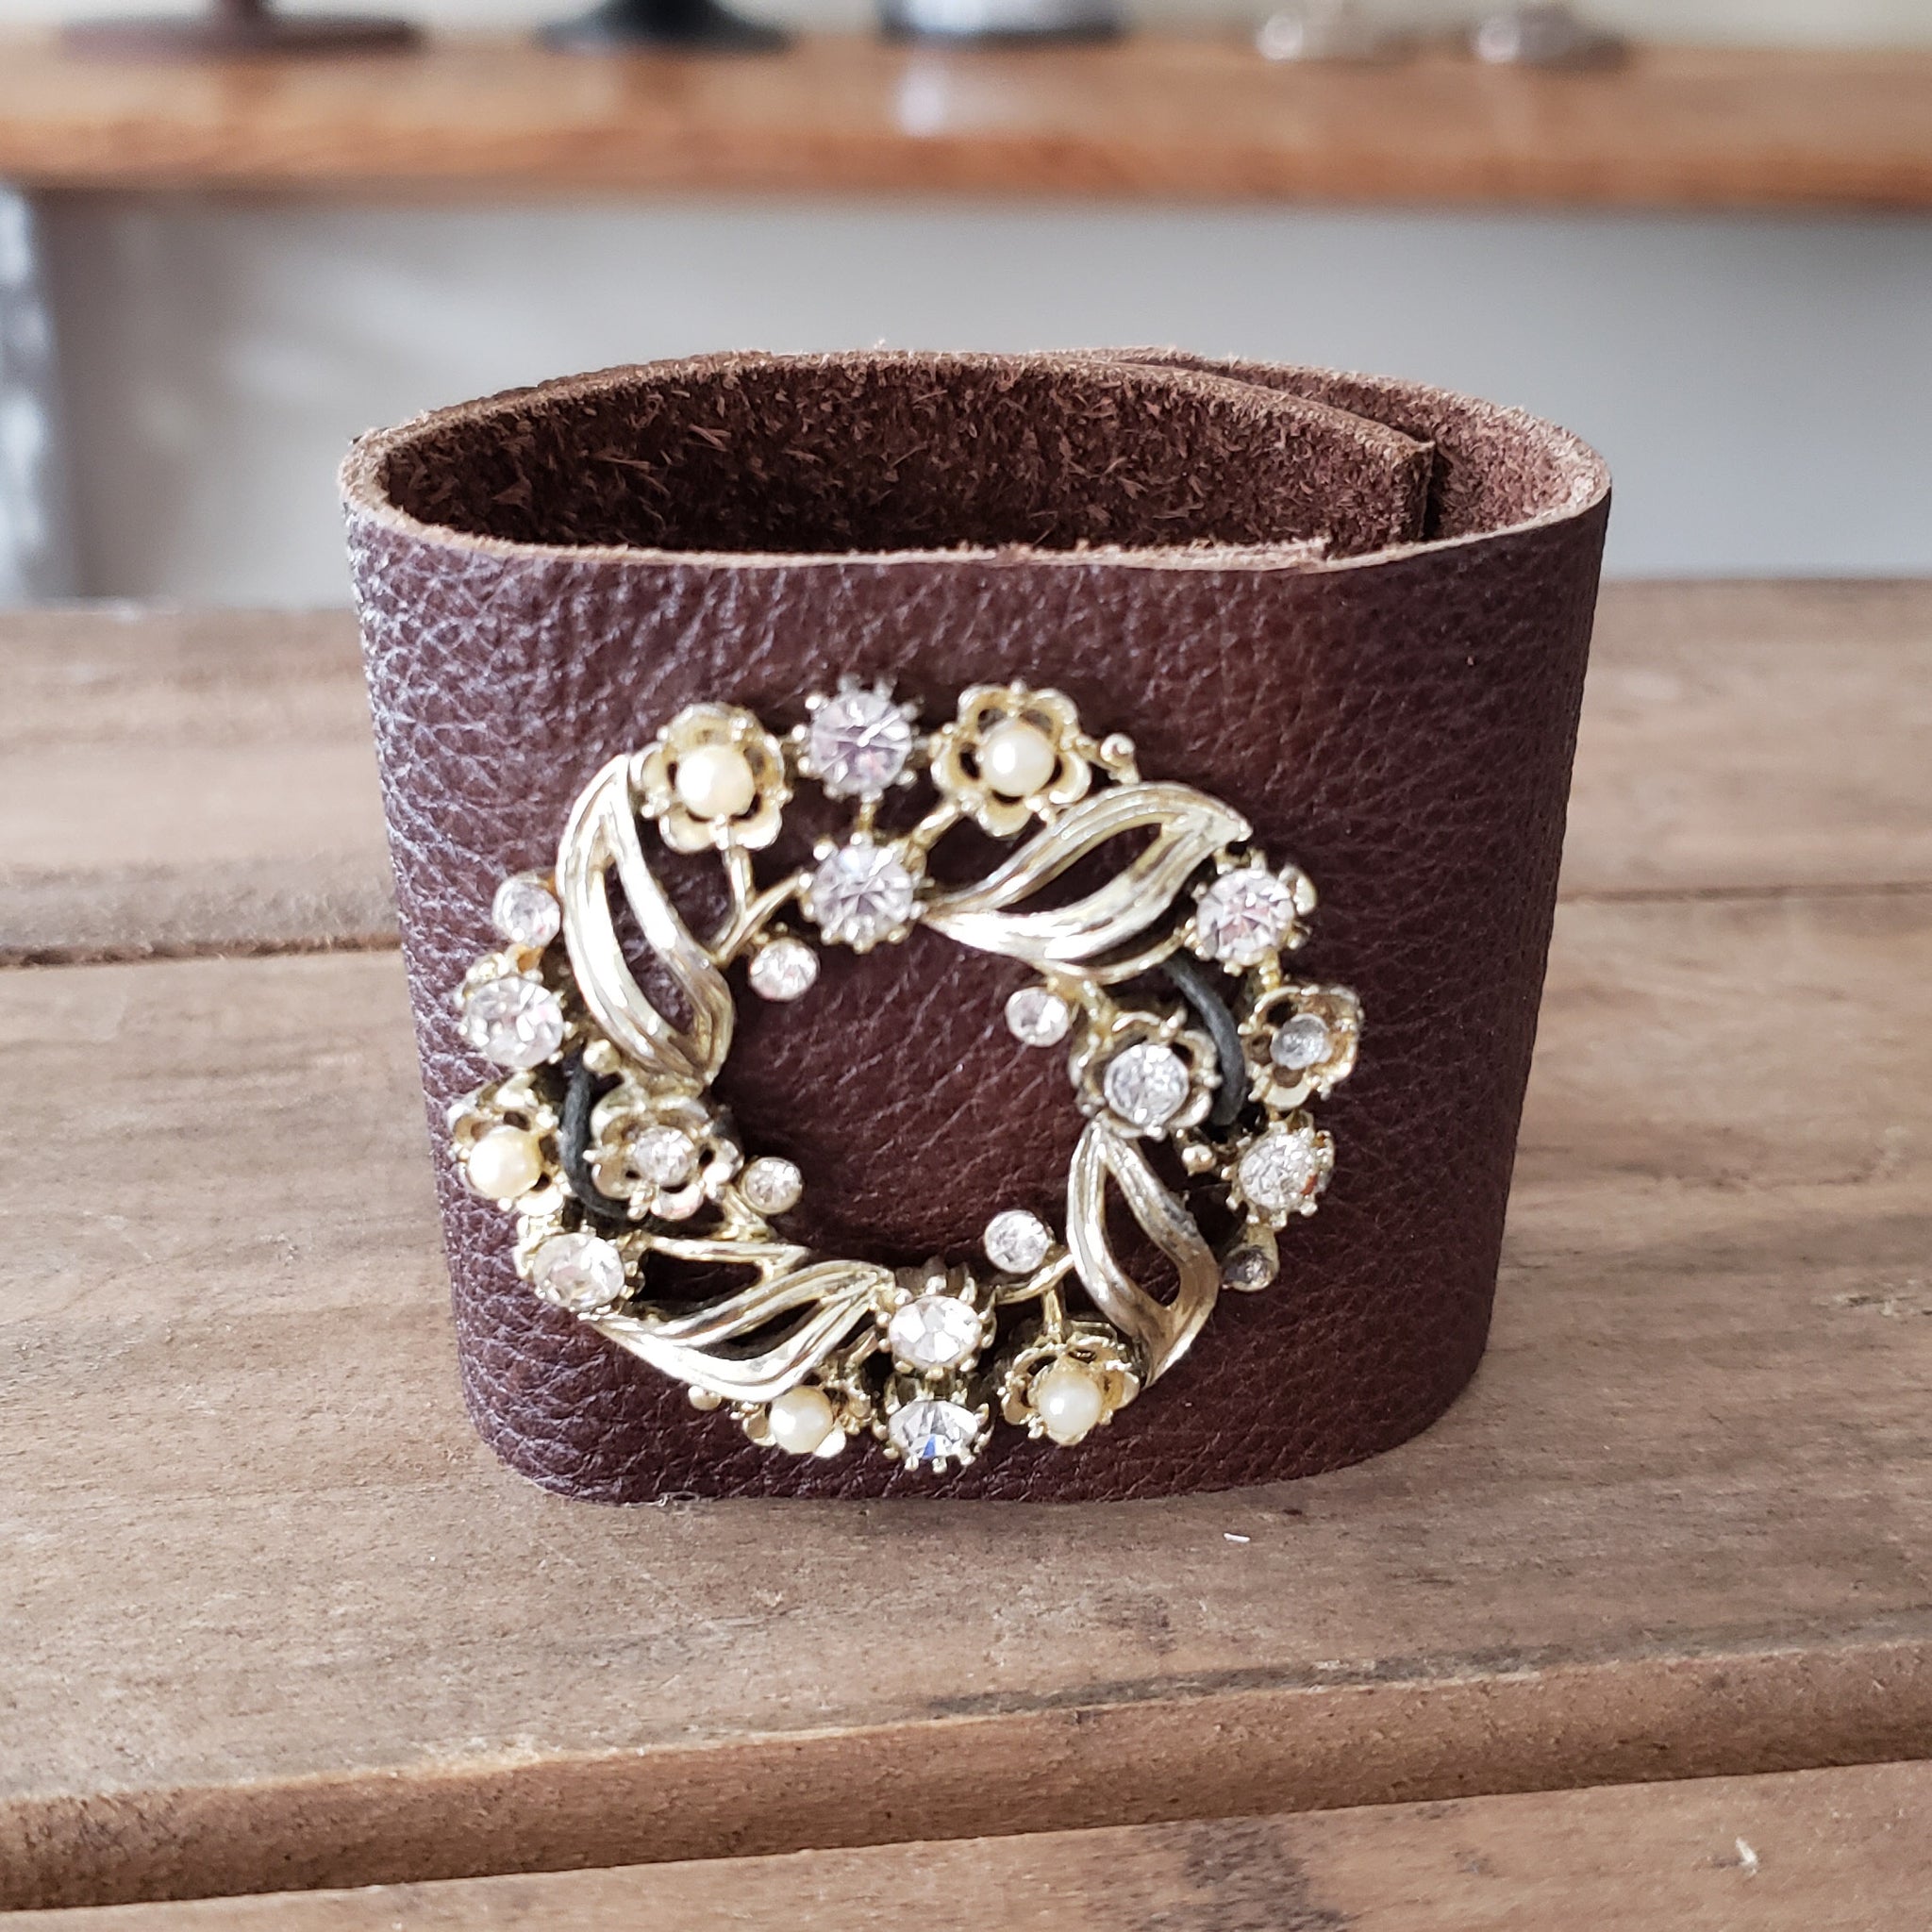 2.5" wide brown leather cuff vintage gold color rhinestone brooch embellishment bracelet